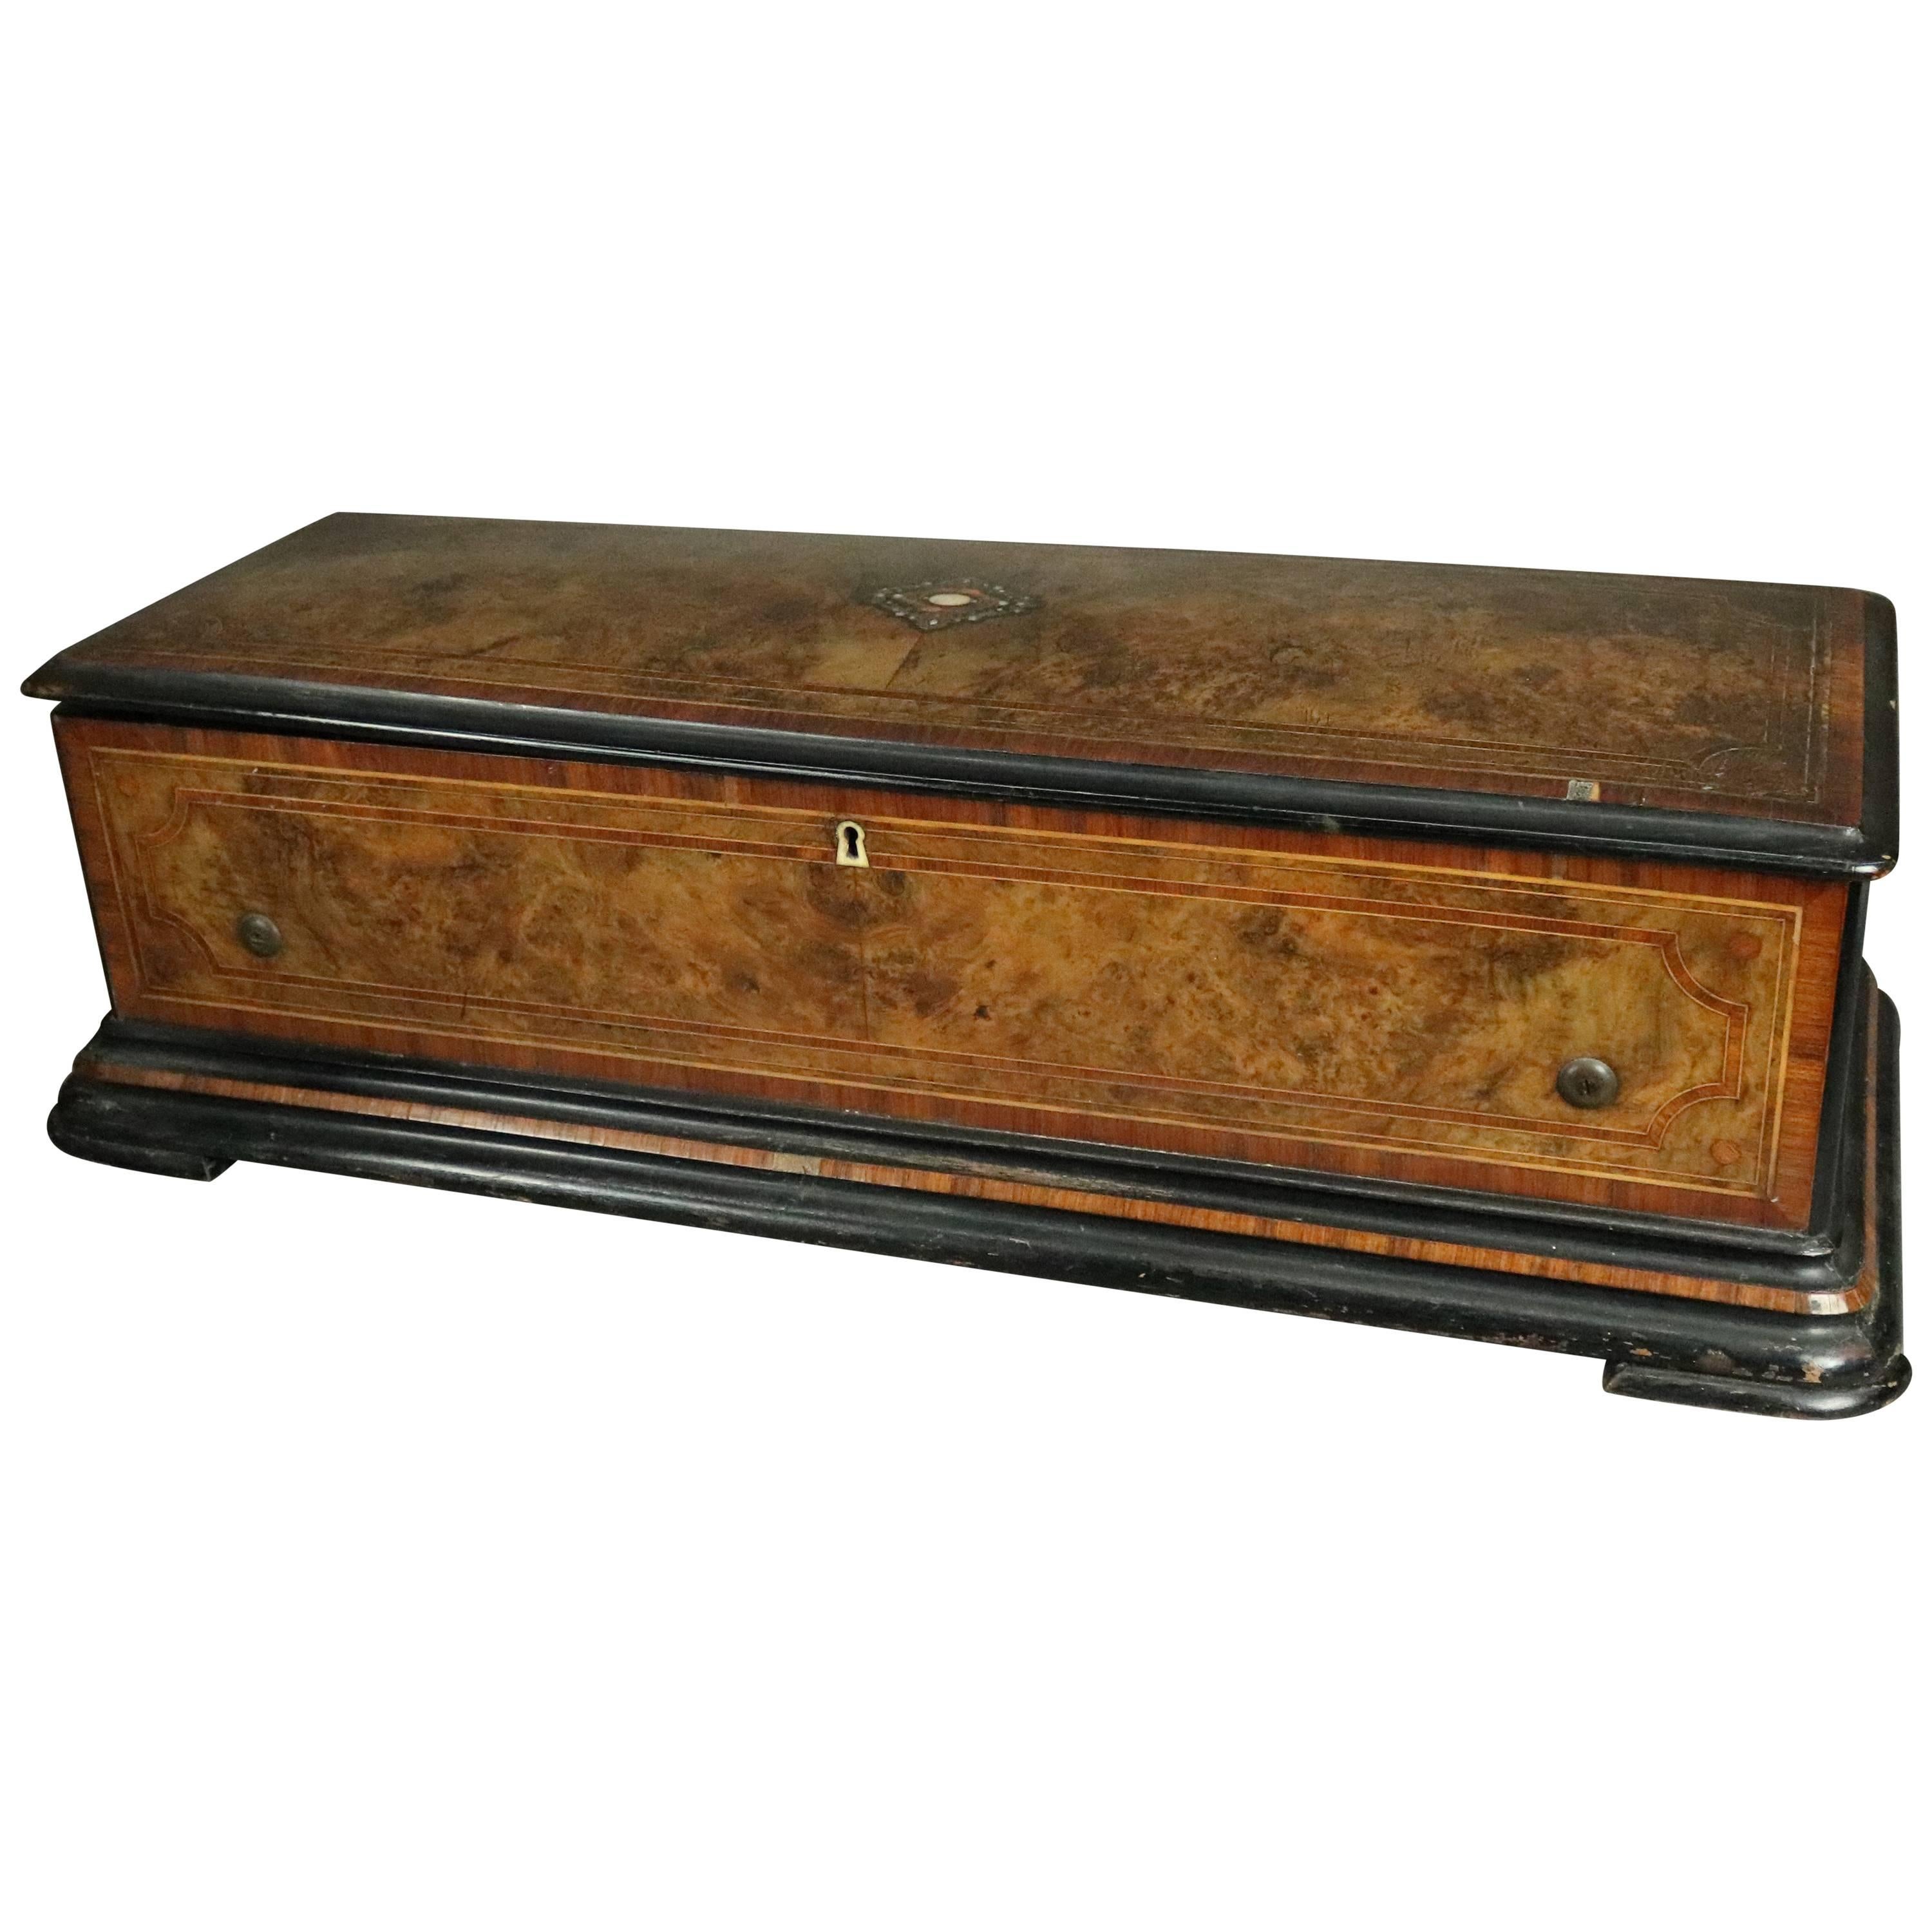 Antique Swiss 12-Tune Cylinder Music Box, Banded & Inlaid Burl Case, circa 1880